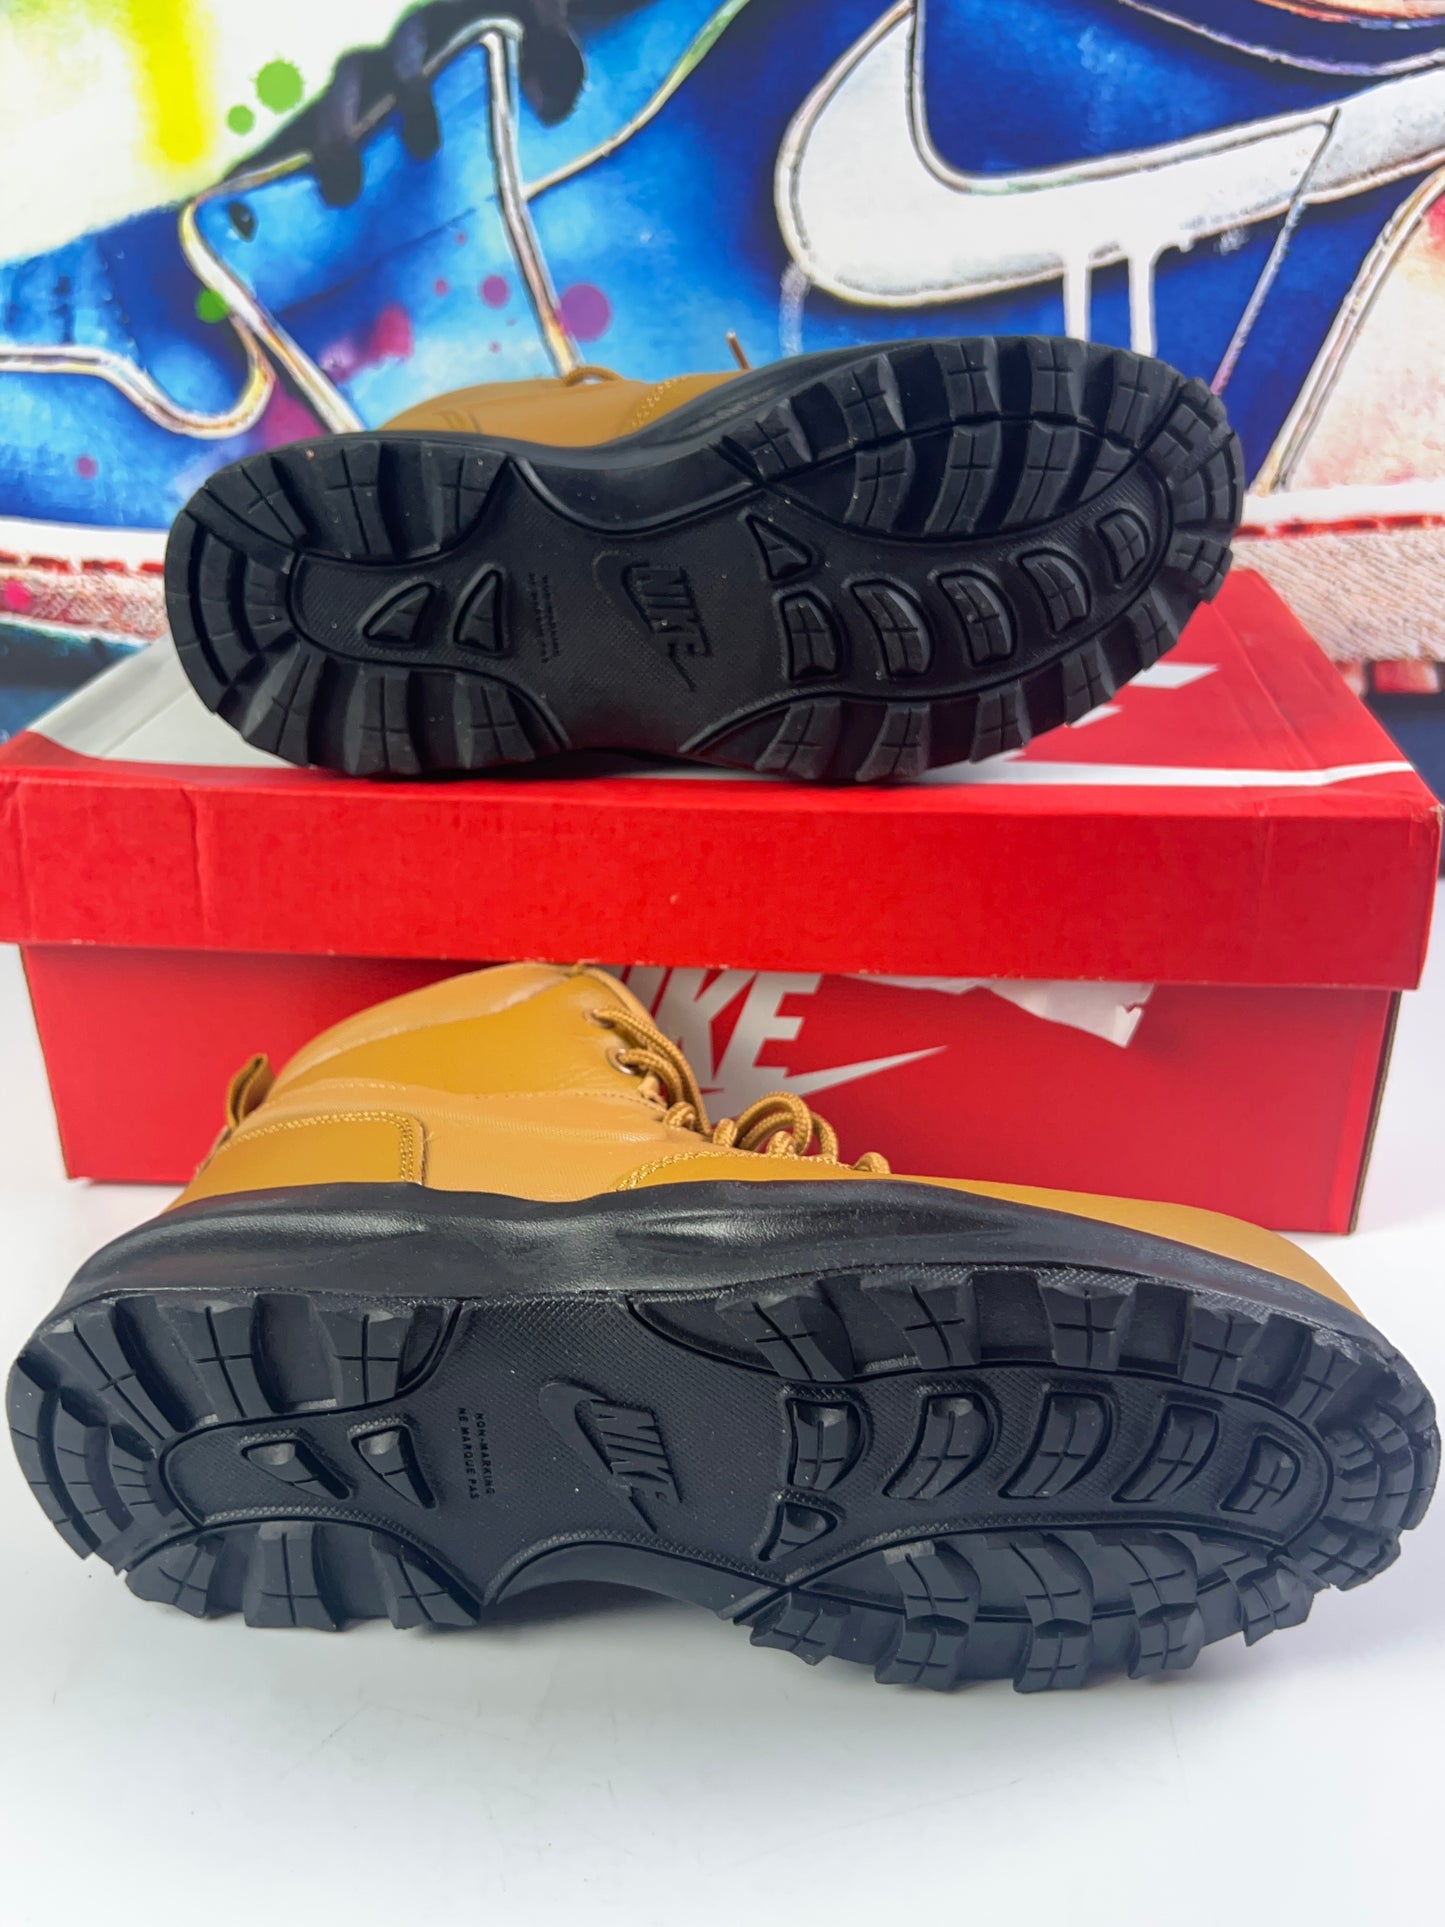 Nike Manoa LTR (GS) Wheat/Black BQ5372 700 Size 6Y NEW